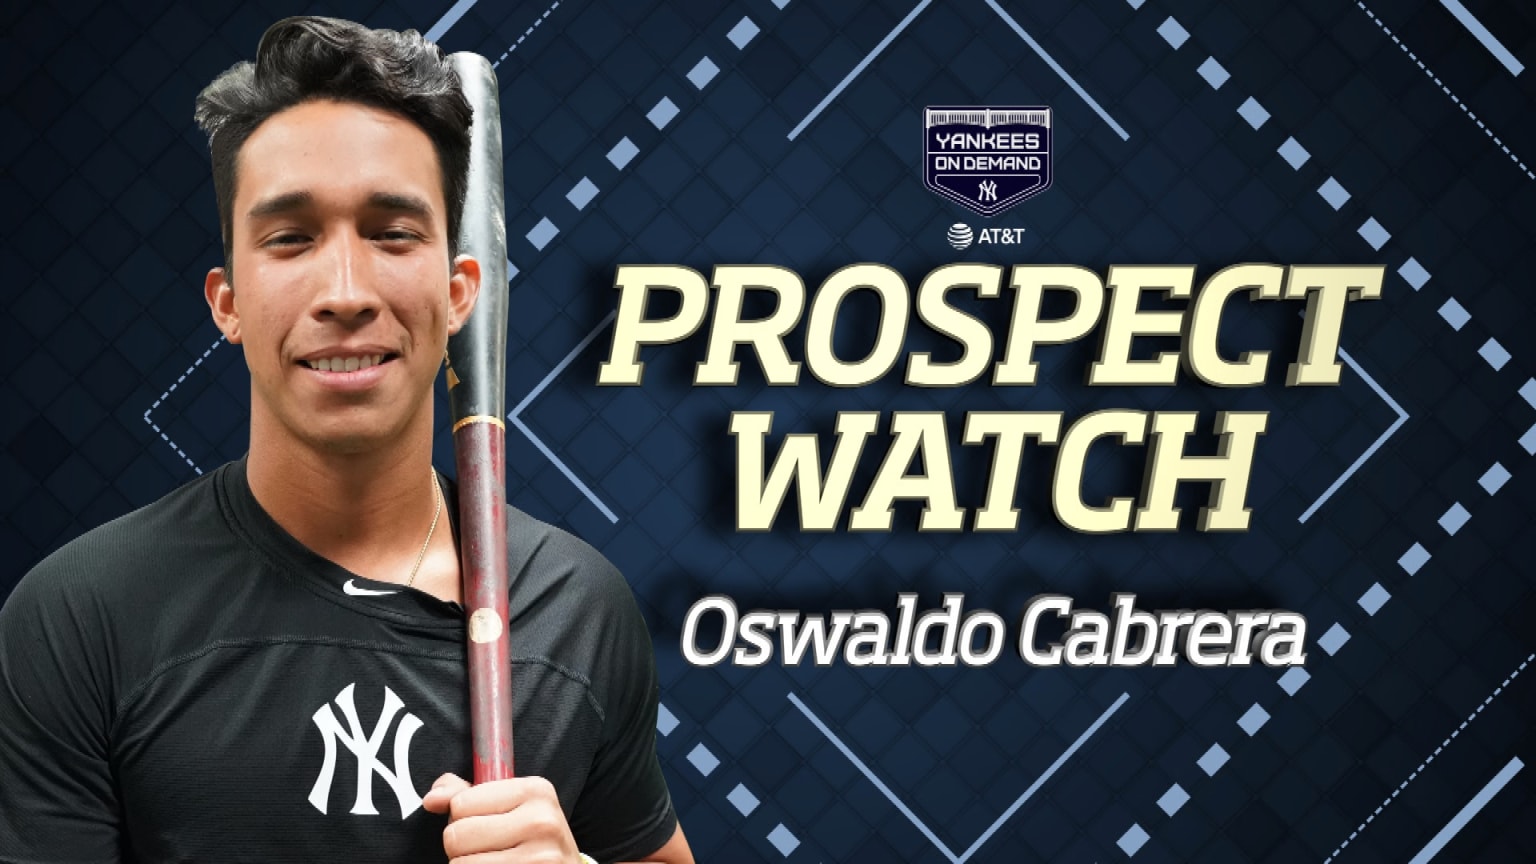 Prospect Watch: Oswaldo Cabrera, 08/29/2019